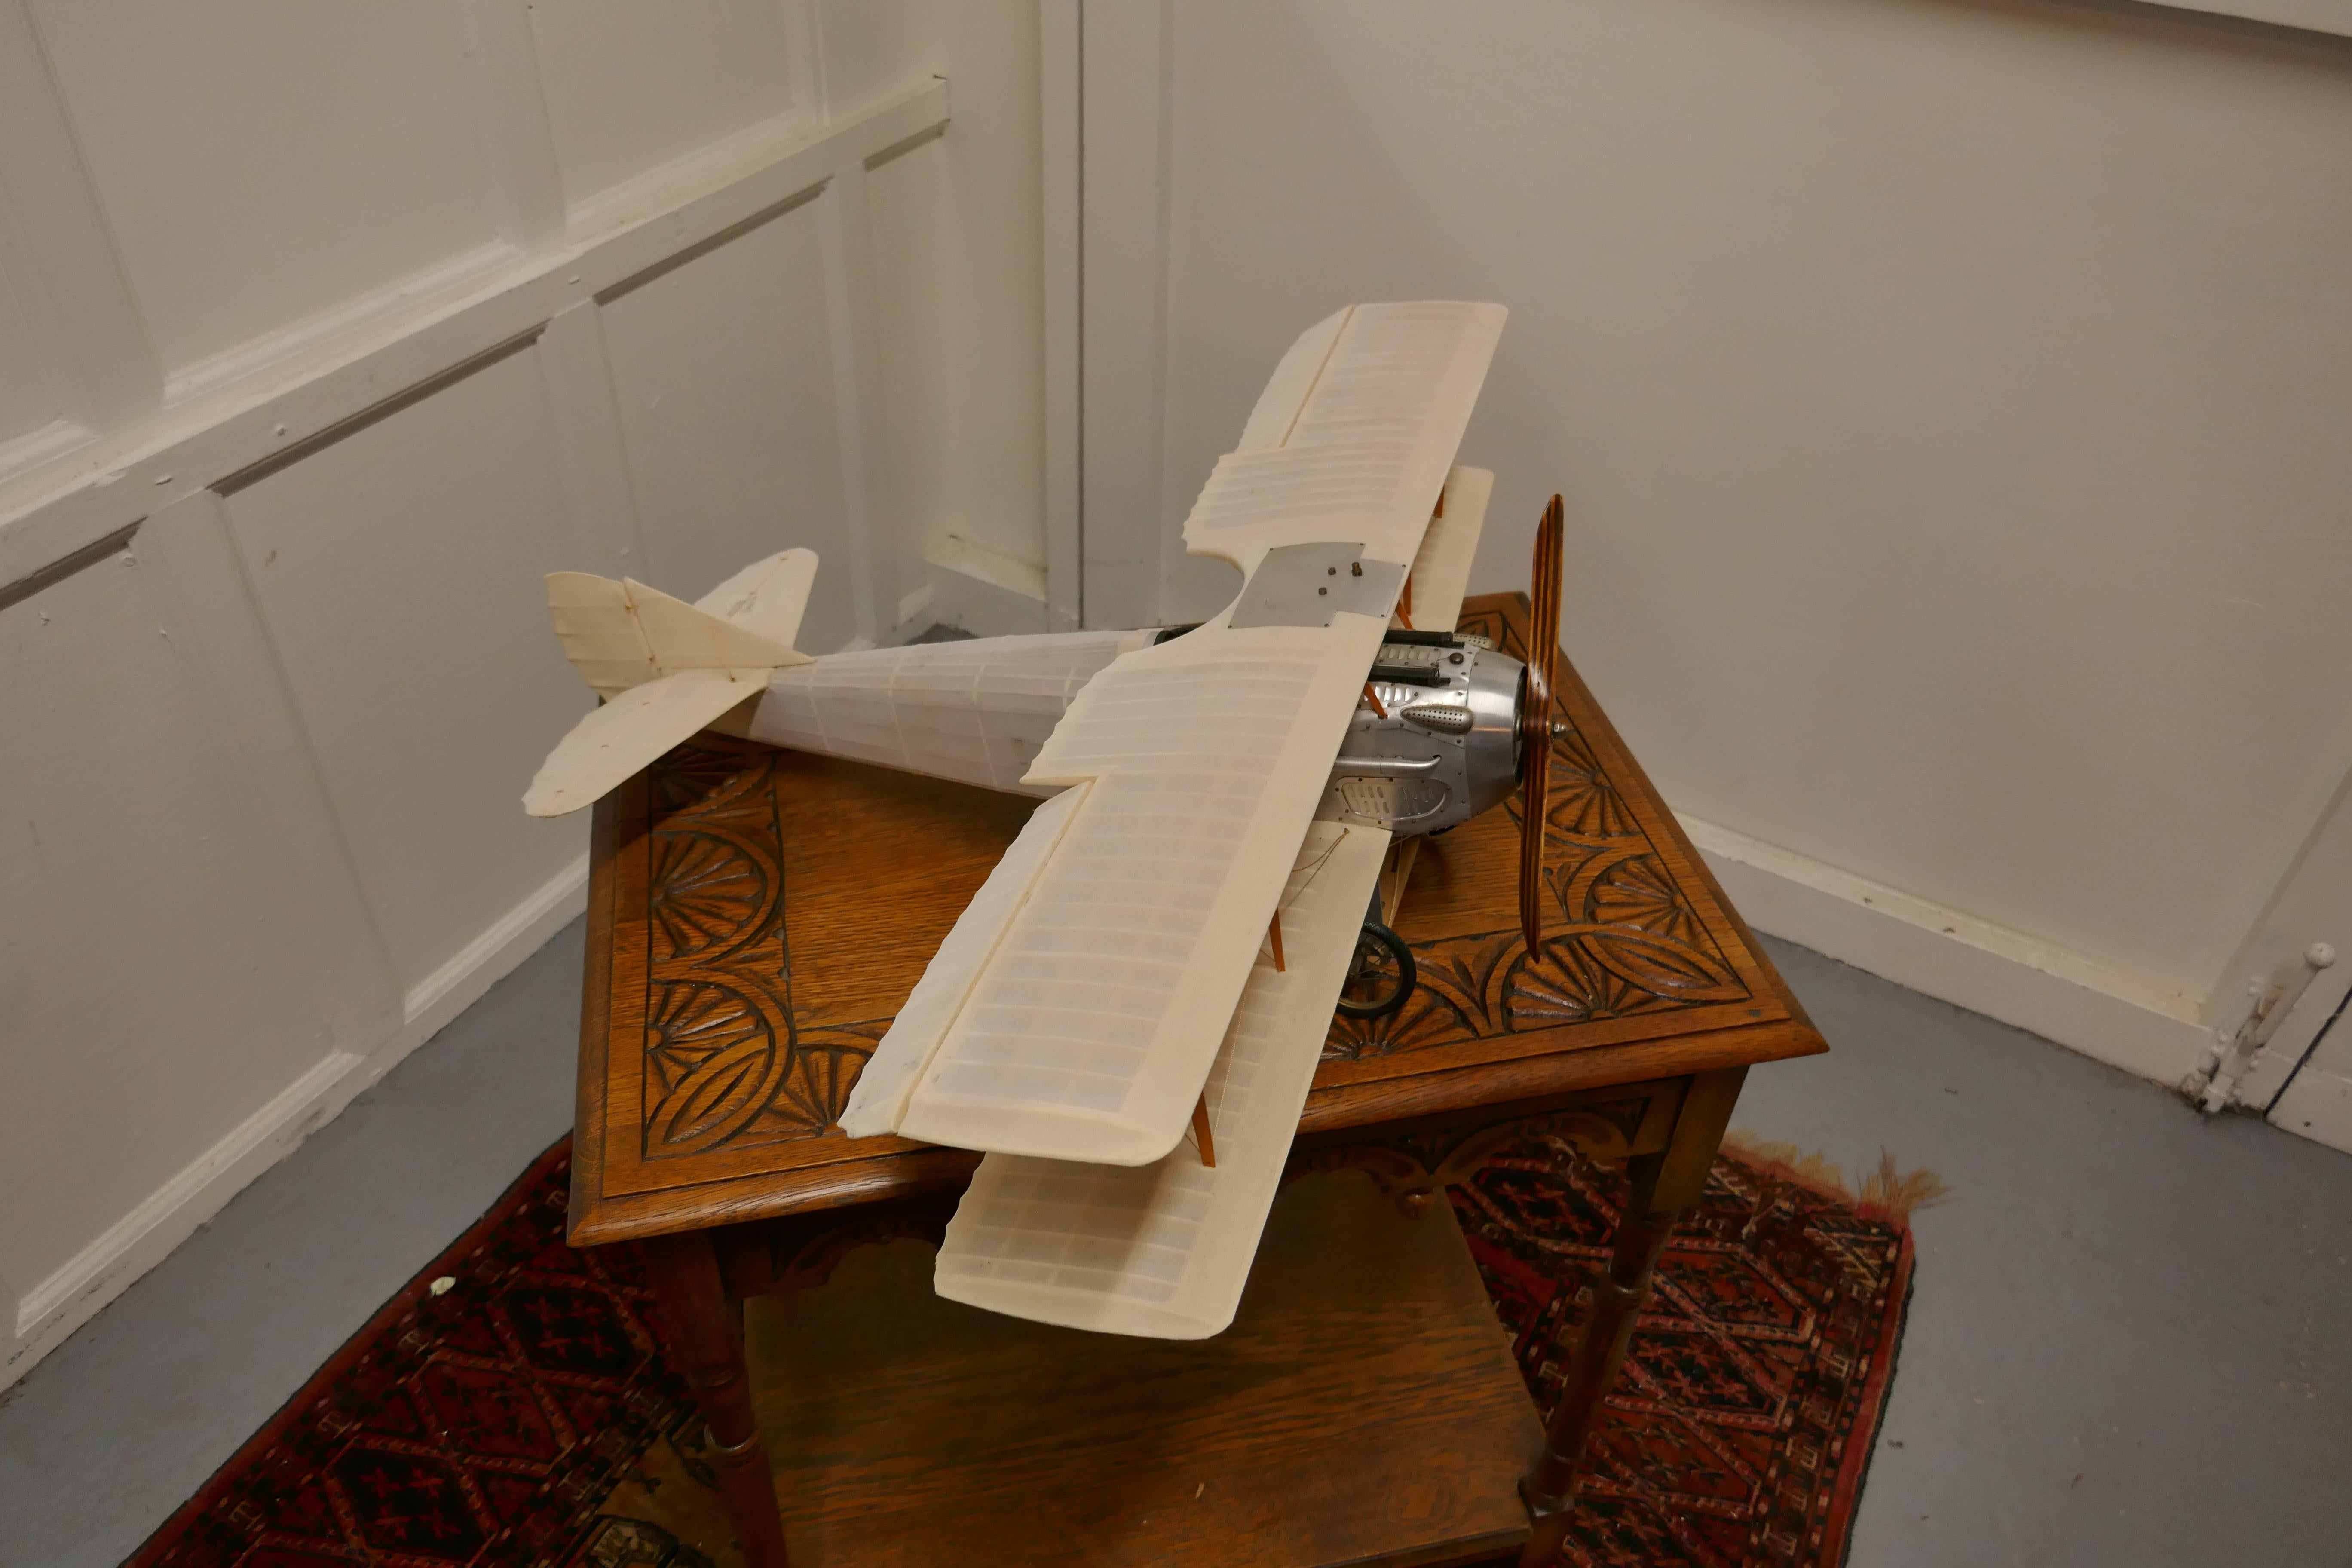 biplane model